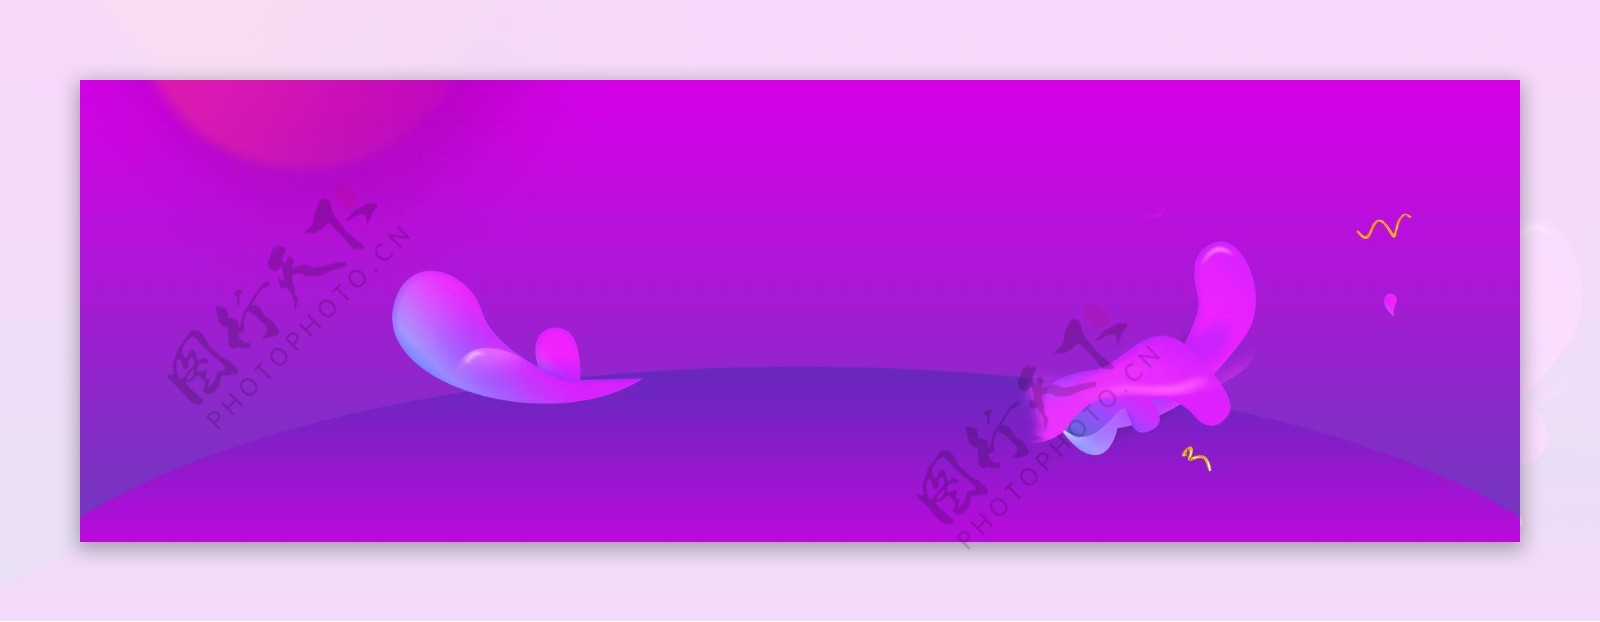 梦幻紫色淘宝全屏banner背景